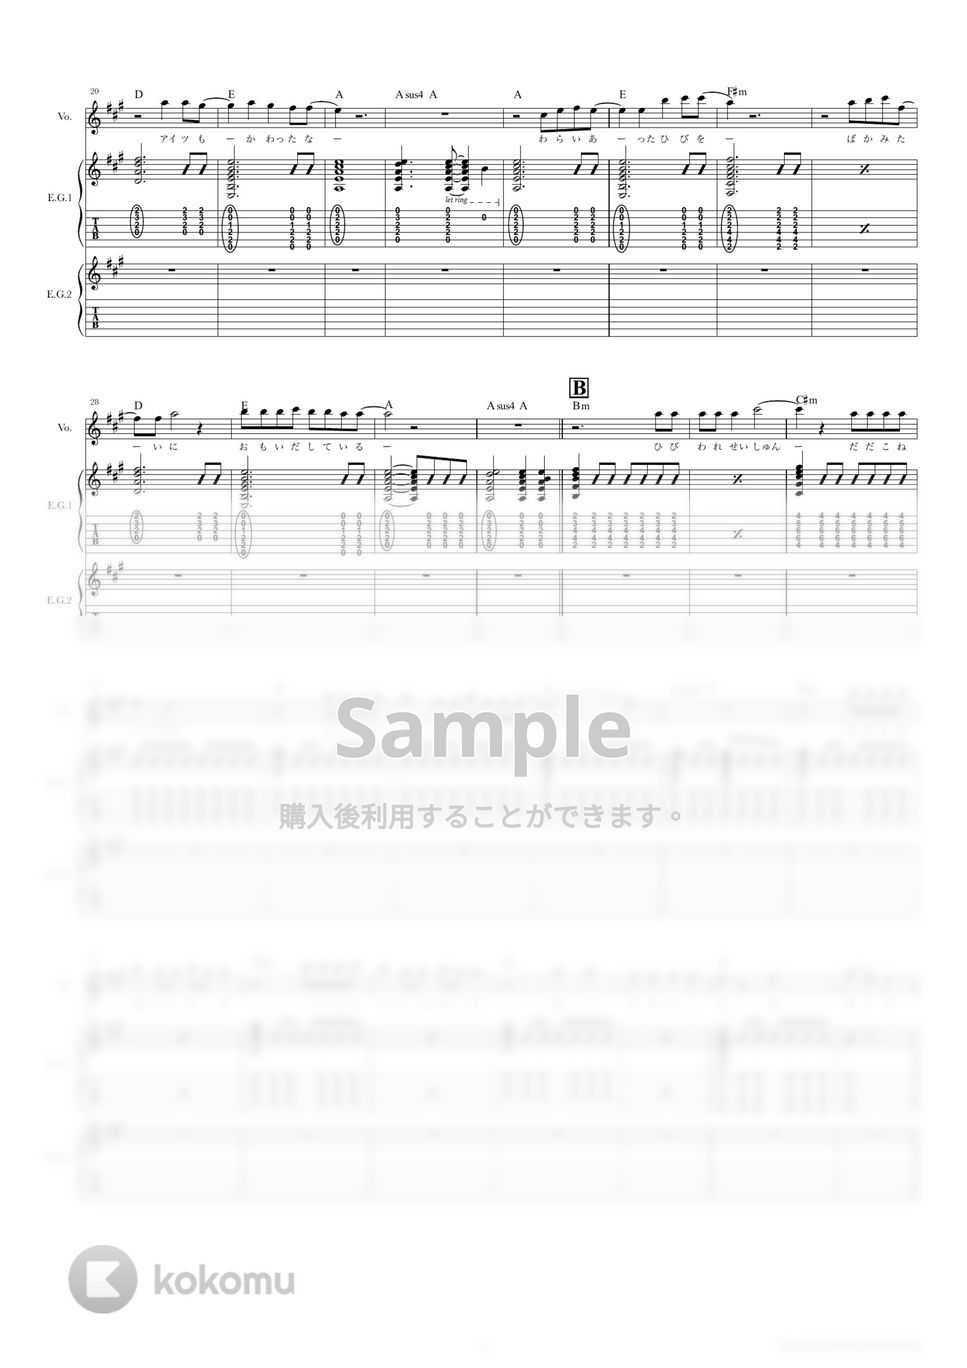 Hump Back - 拝啓、少年よ (ギタースコア・歌詞・コード付き) by TRIAD GUITAR SCHOOL